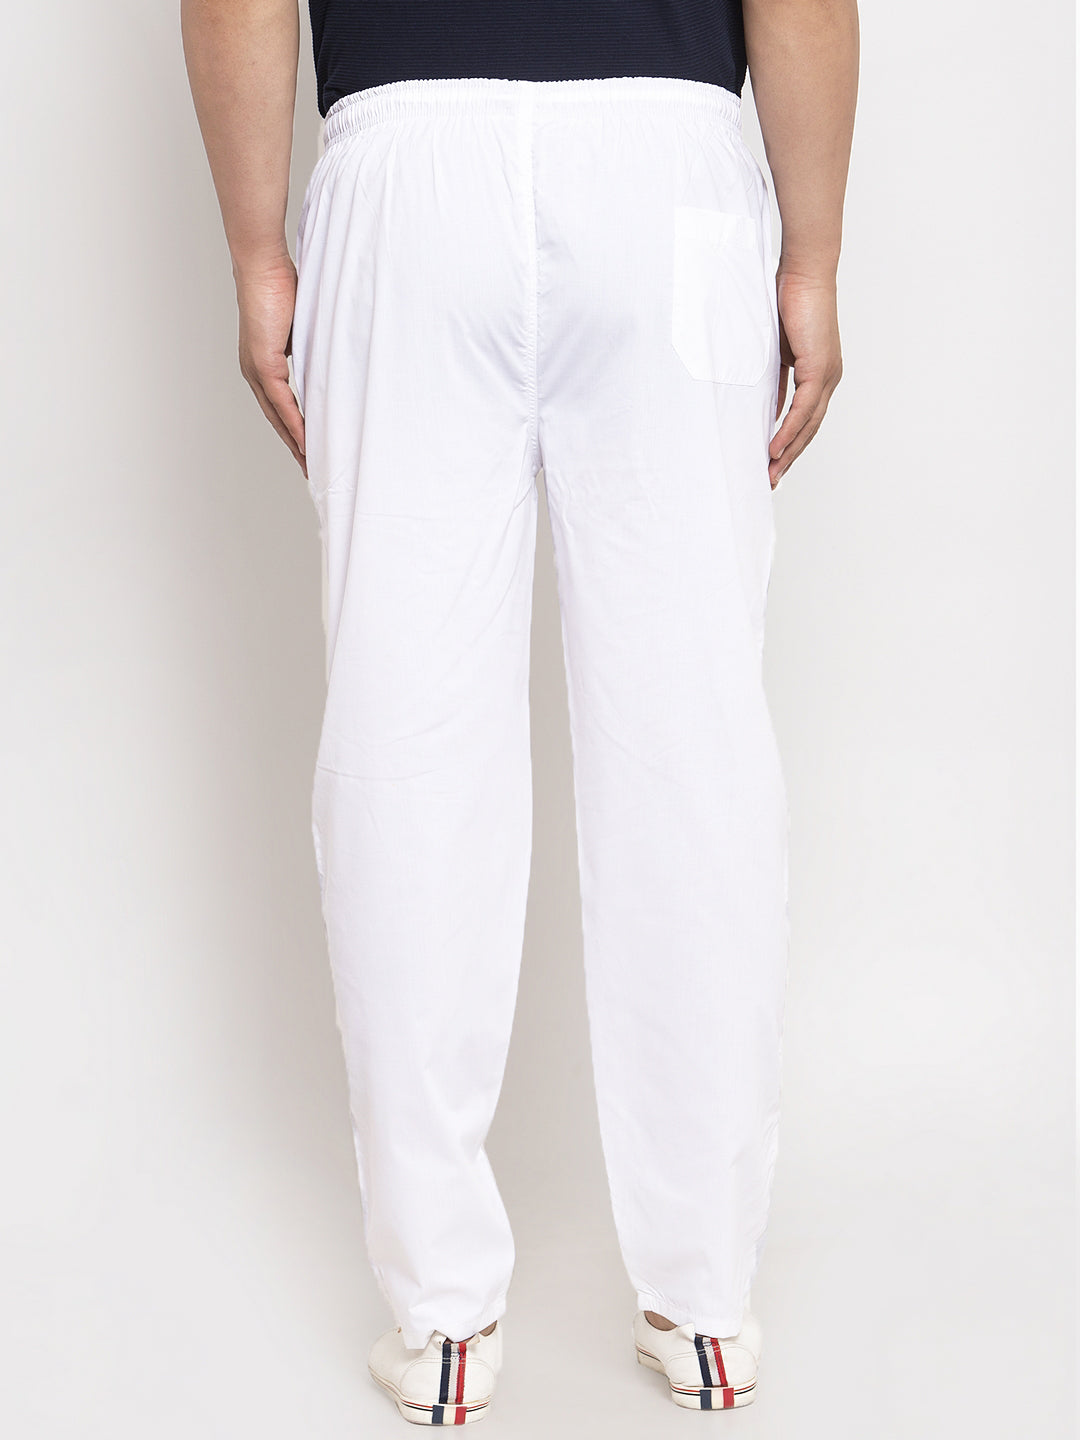 Men's White Solid Cotton Track Pants ( JOG 011White ) - Jainish